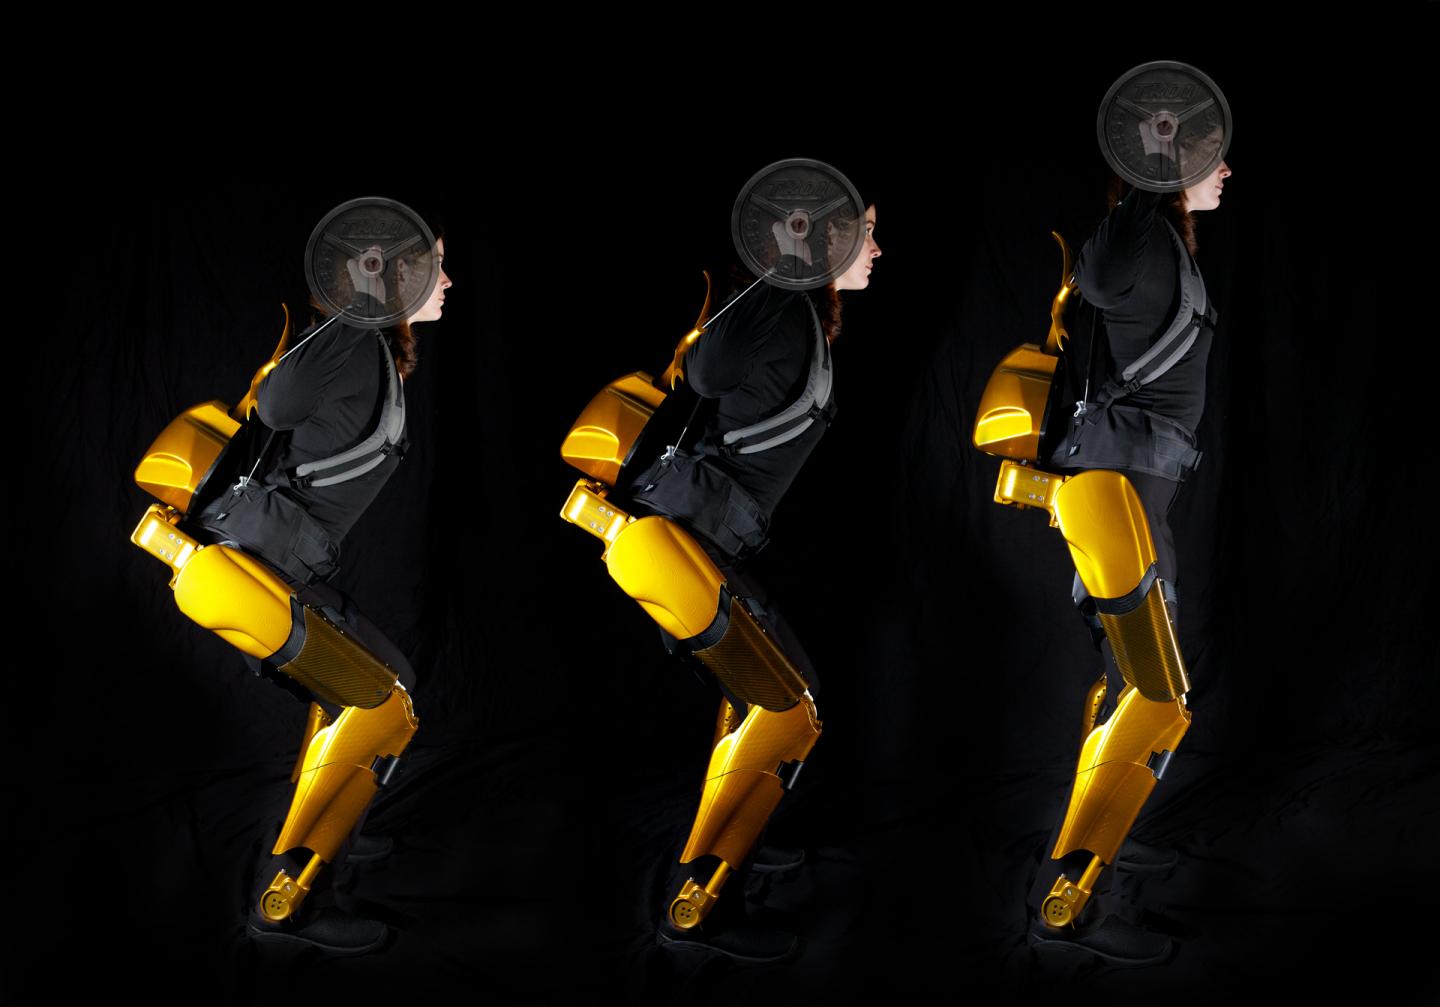 Lifting Weight with Exoskeleton